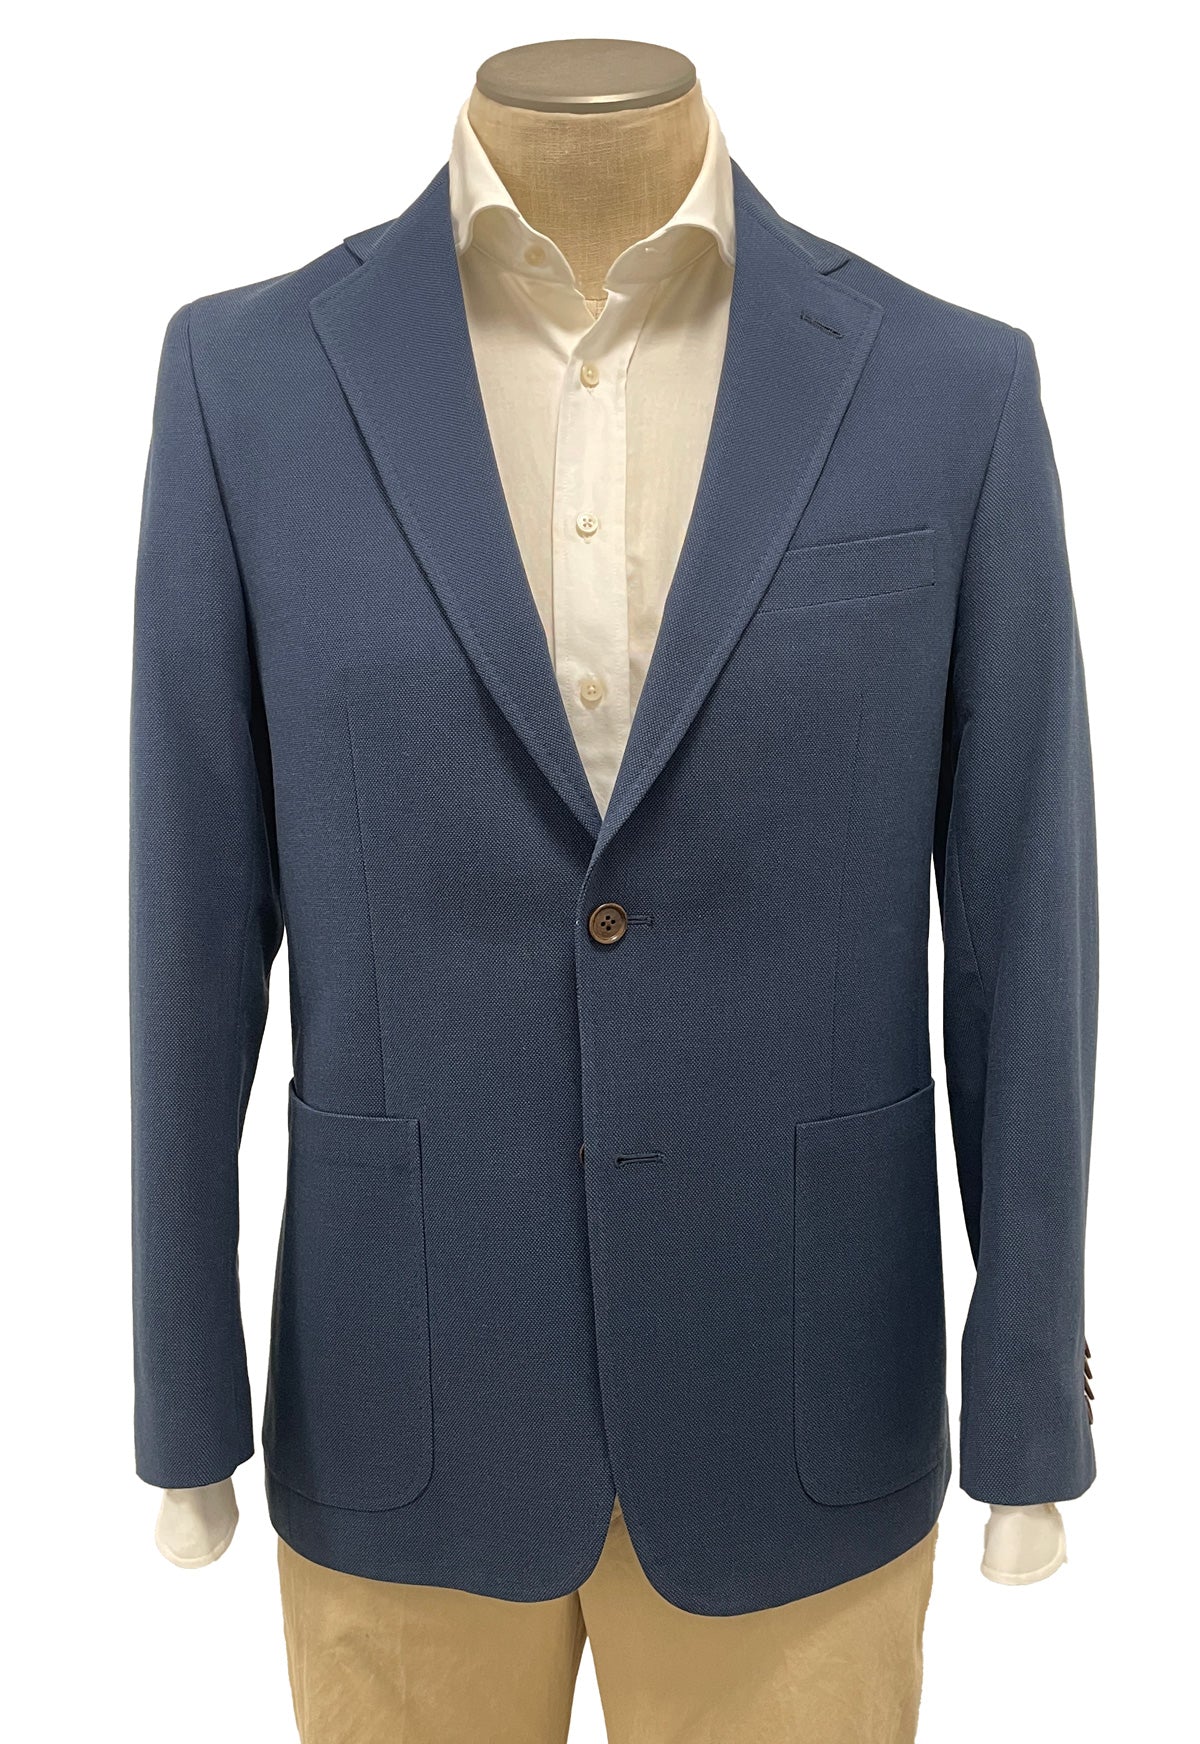 Men's Sport Coat Modern Cut - BLUE - 100% COTTON